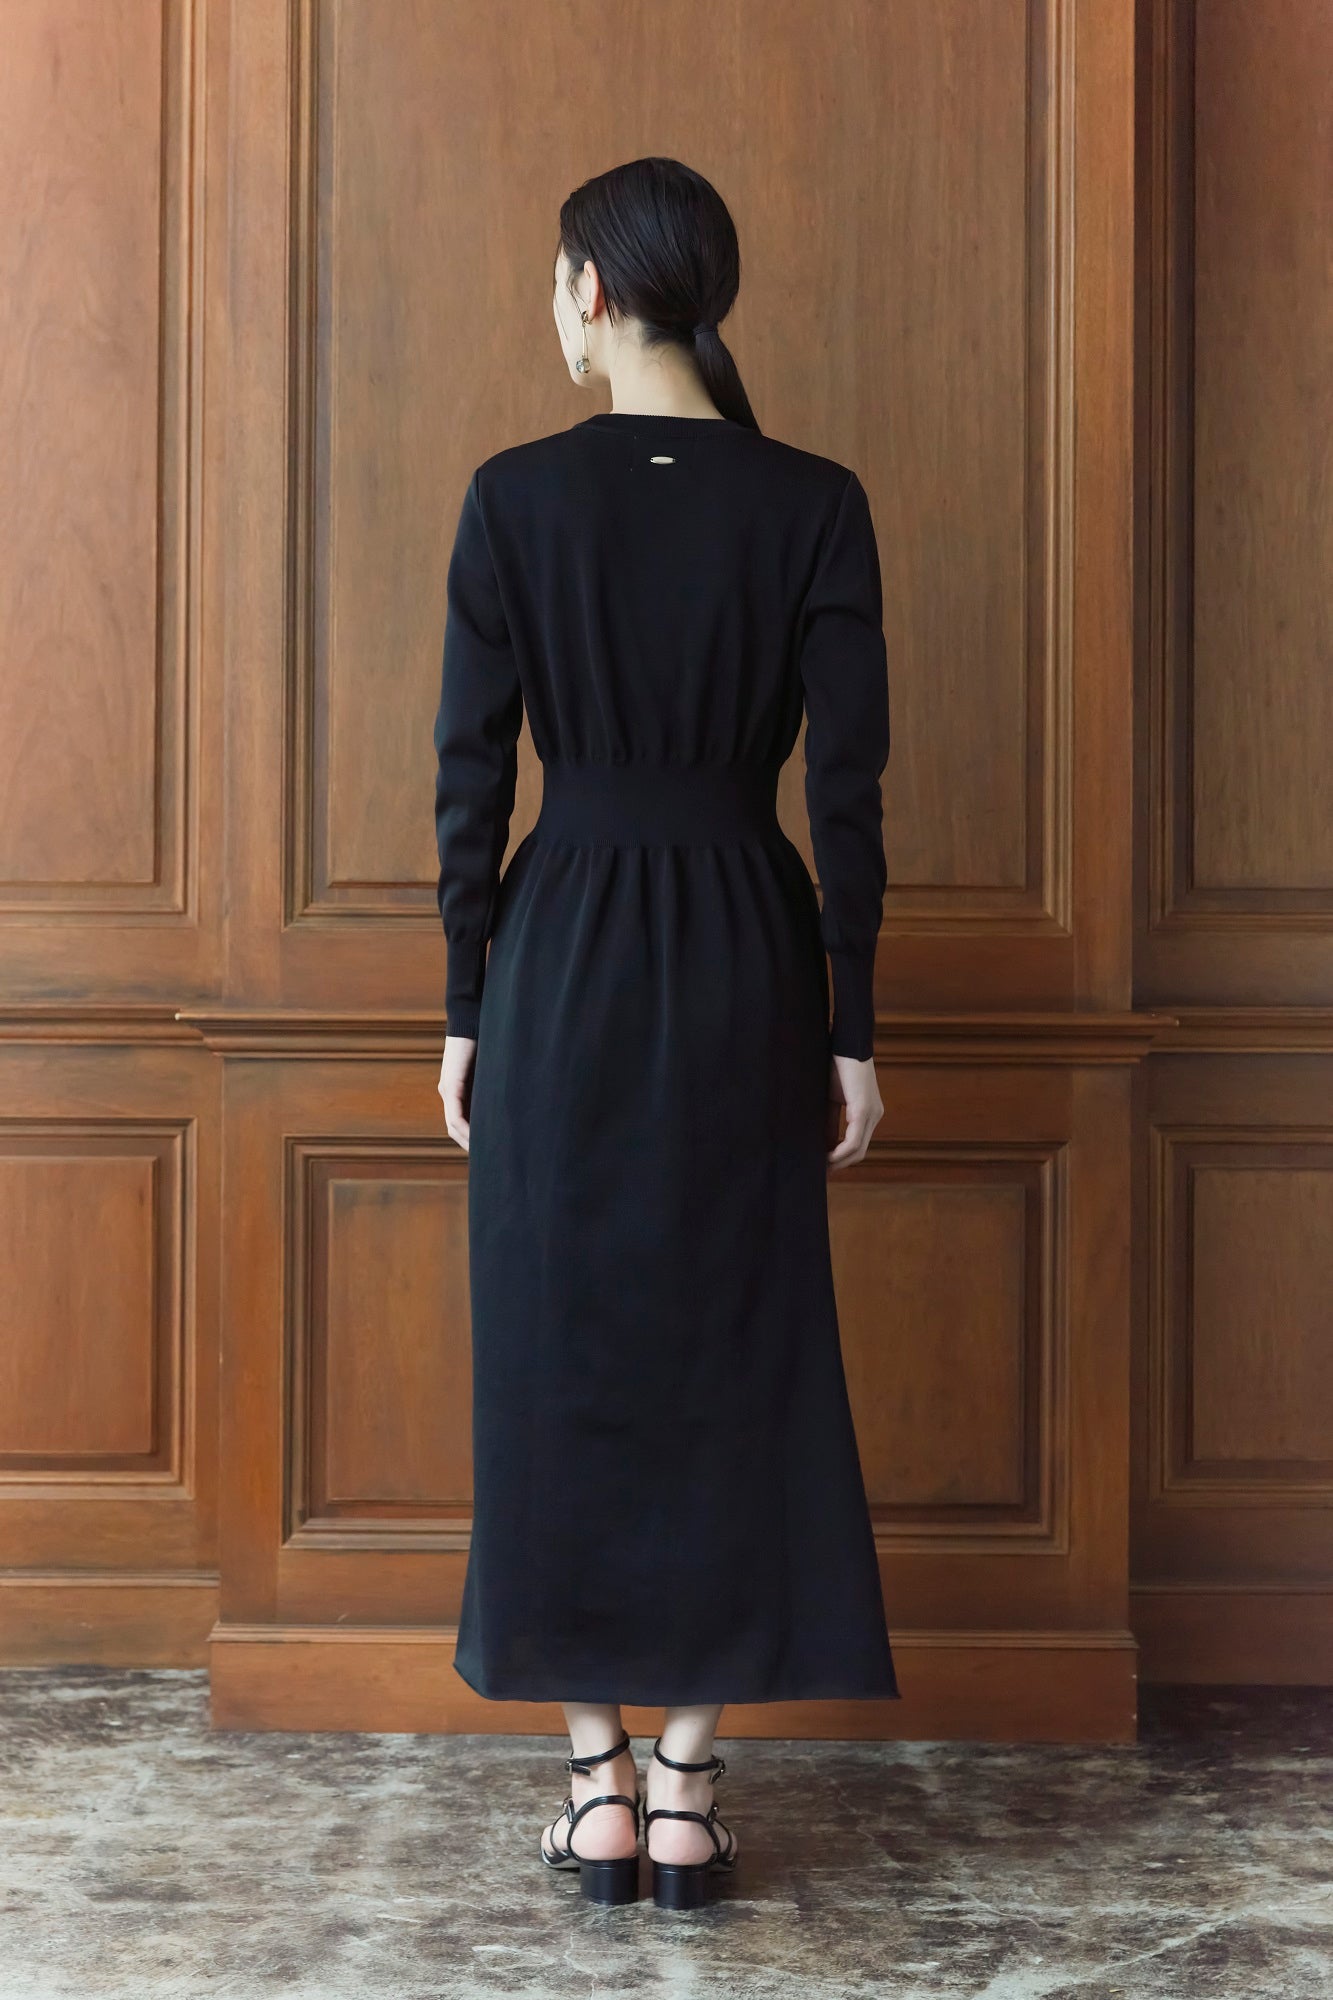 Elastic knit dress (Black)